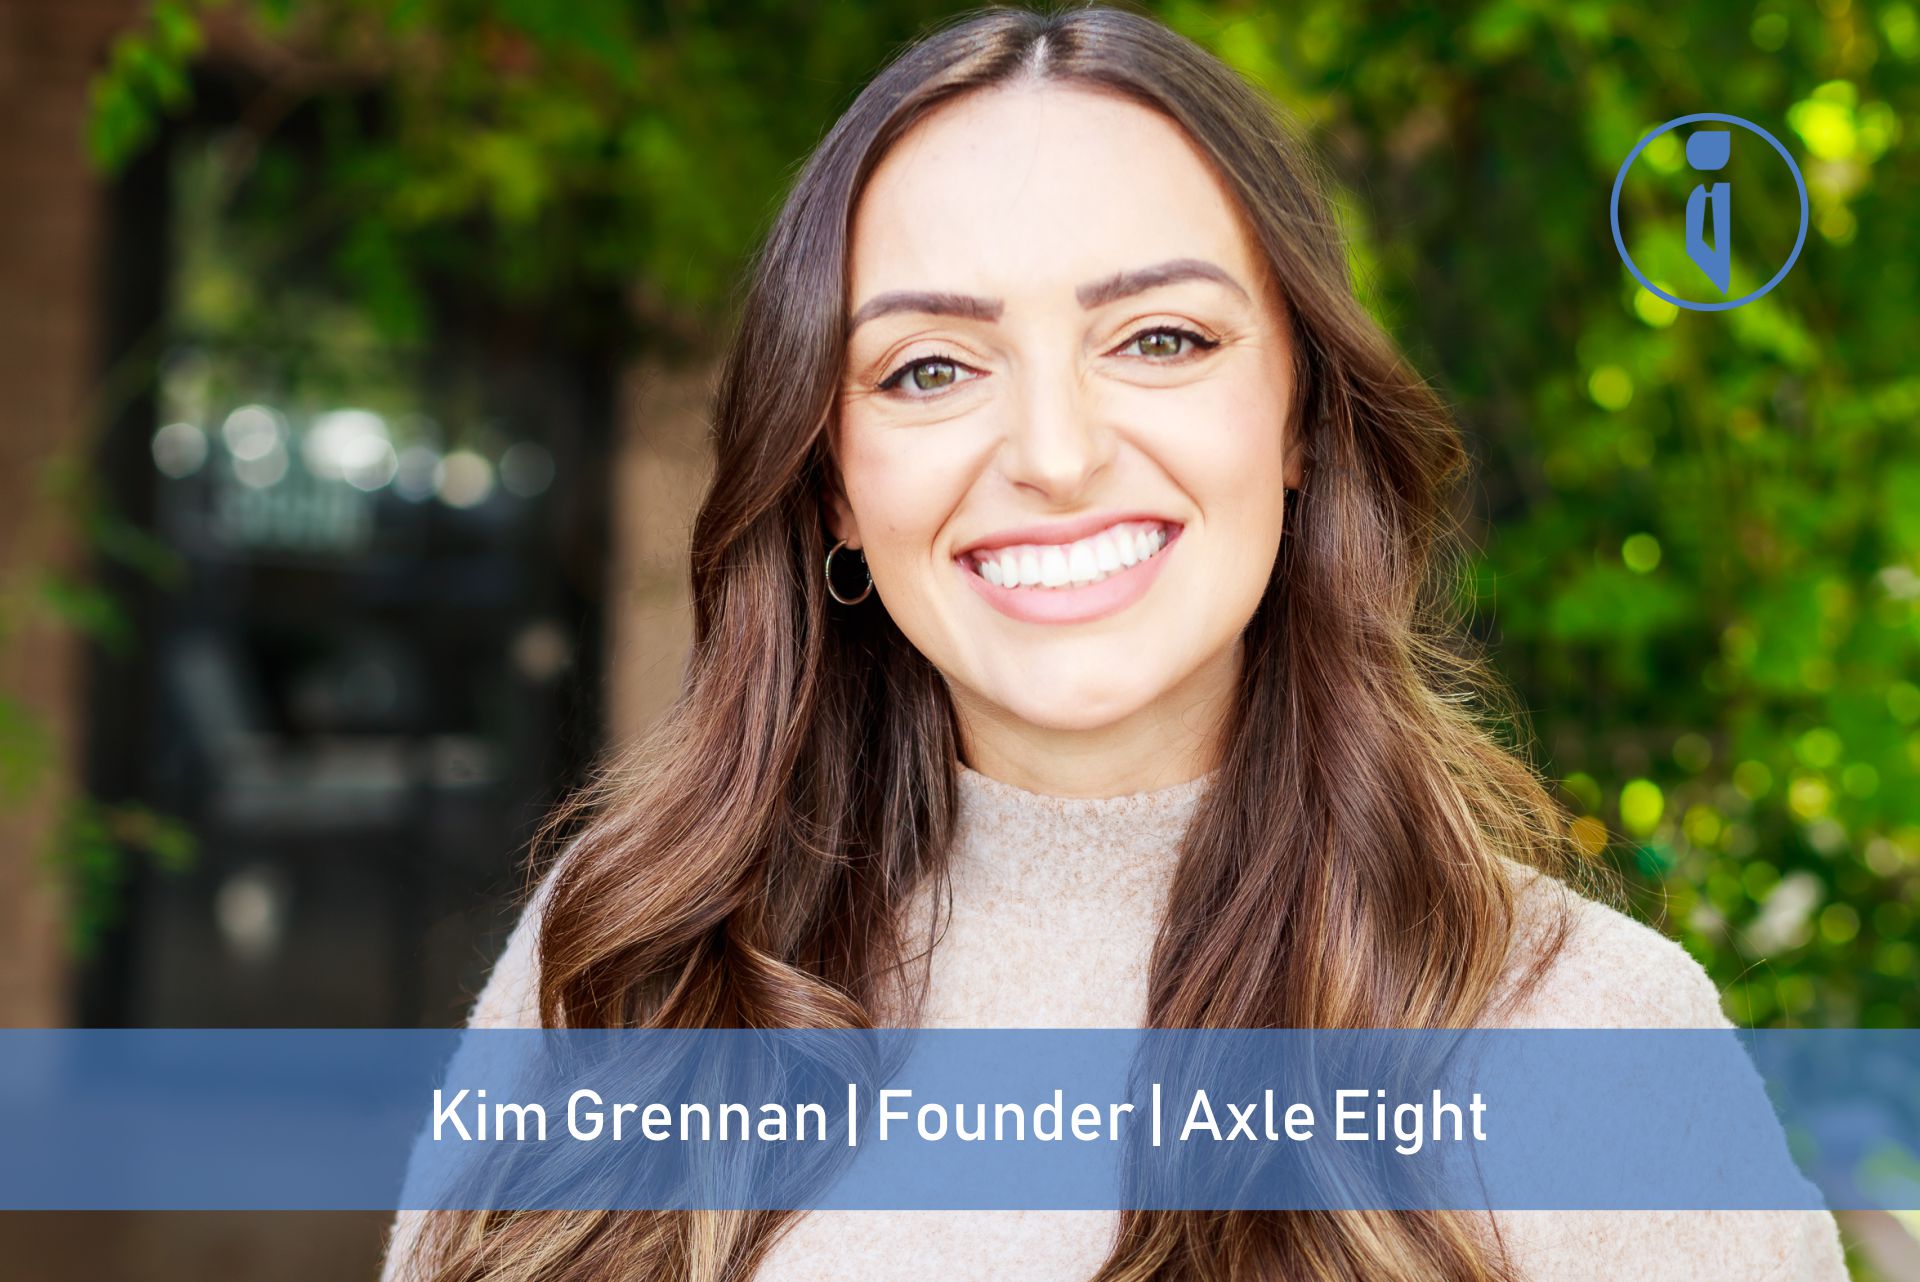 Kim Grennan: Creating Opportunities to Help Companies Grow